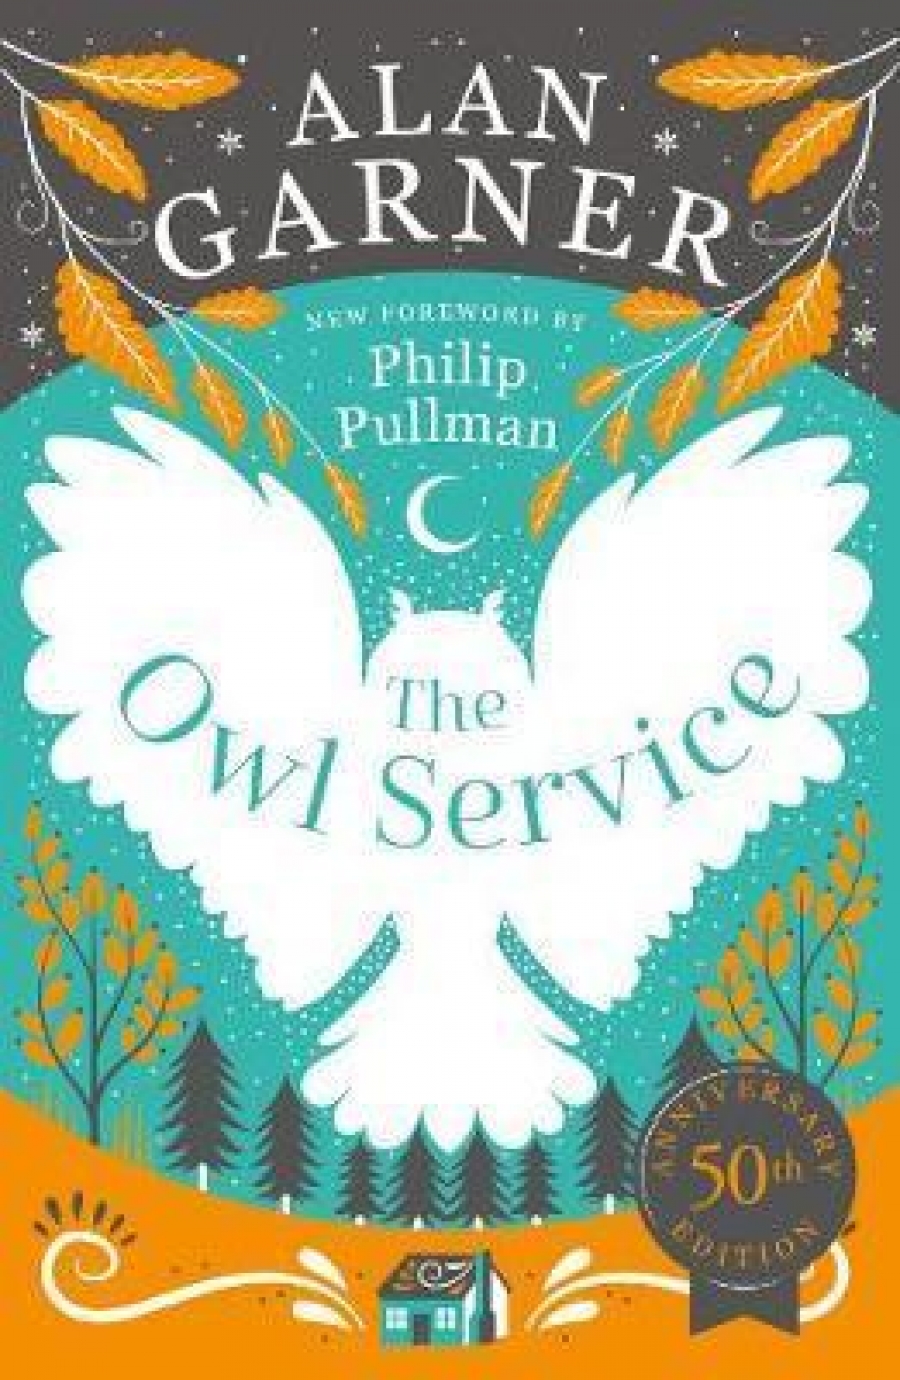 Garner, Alan Owl Service, the 